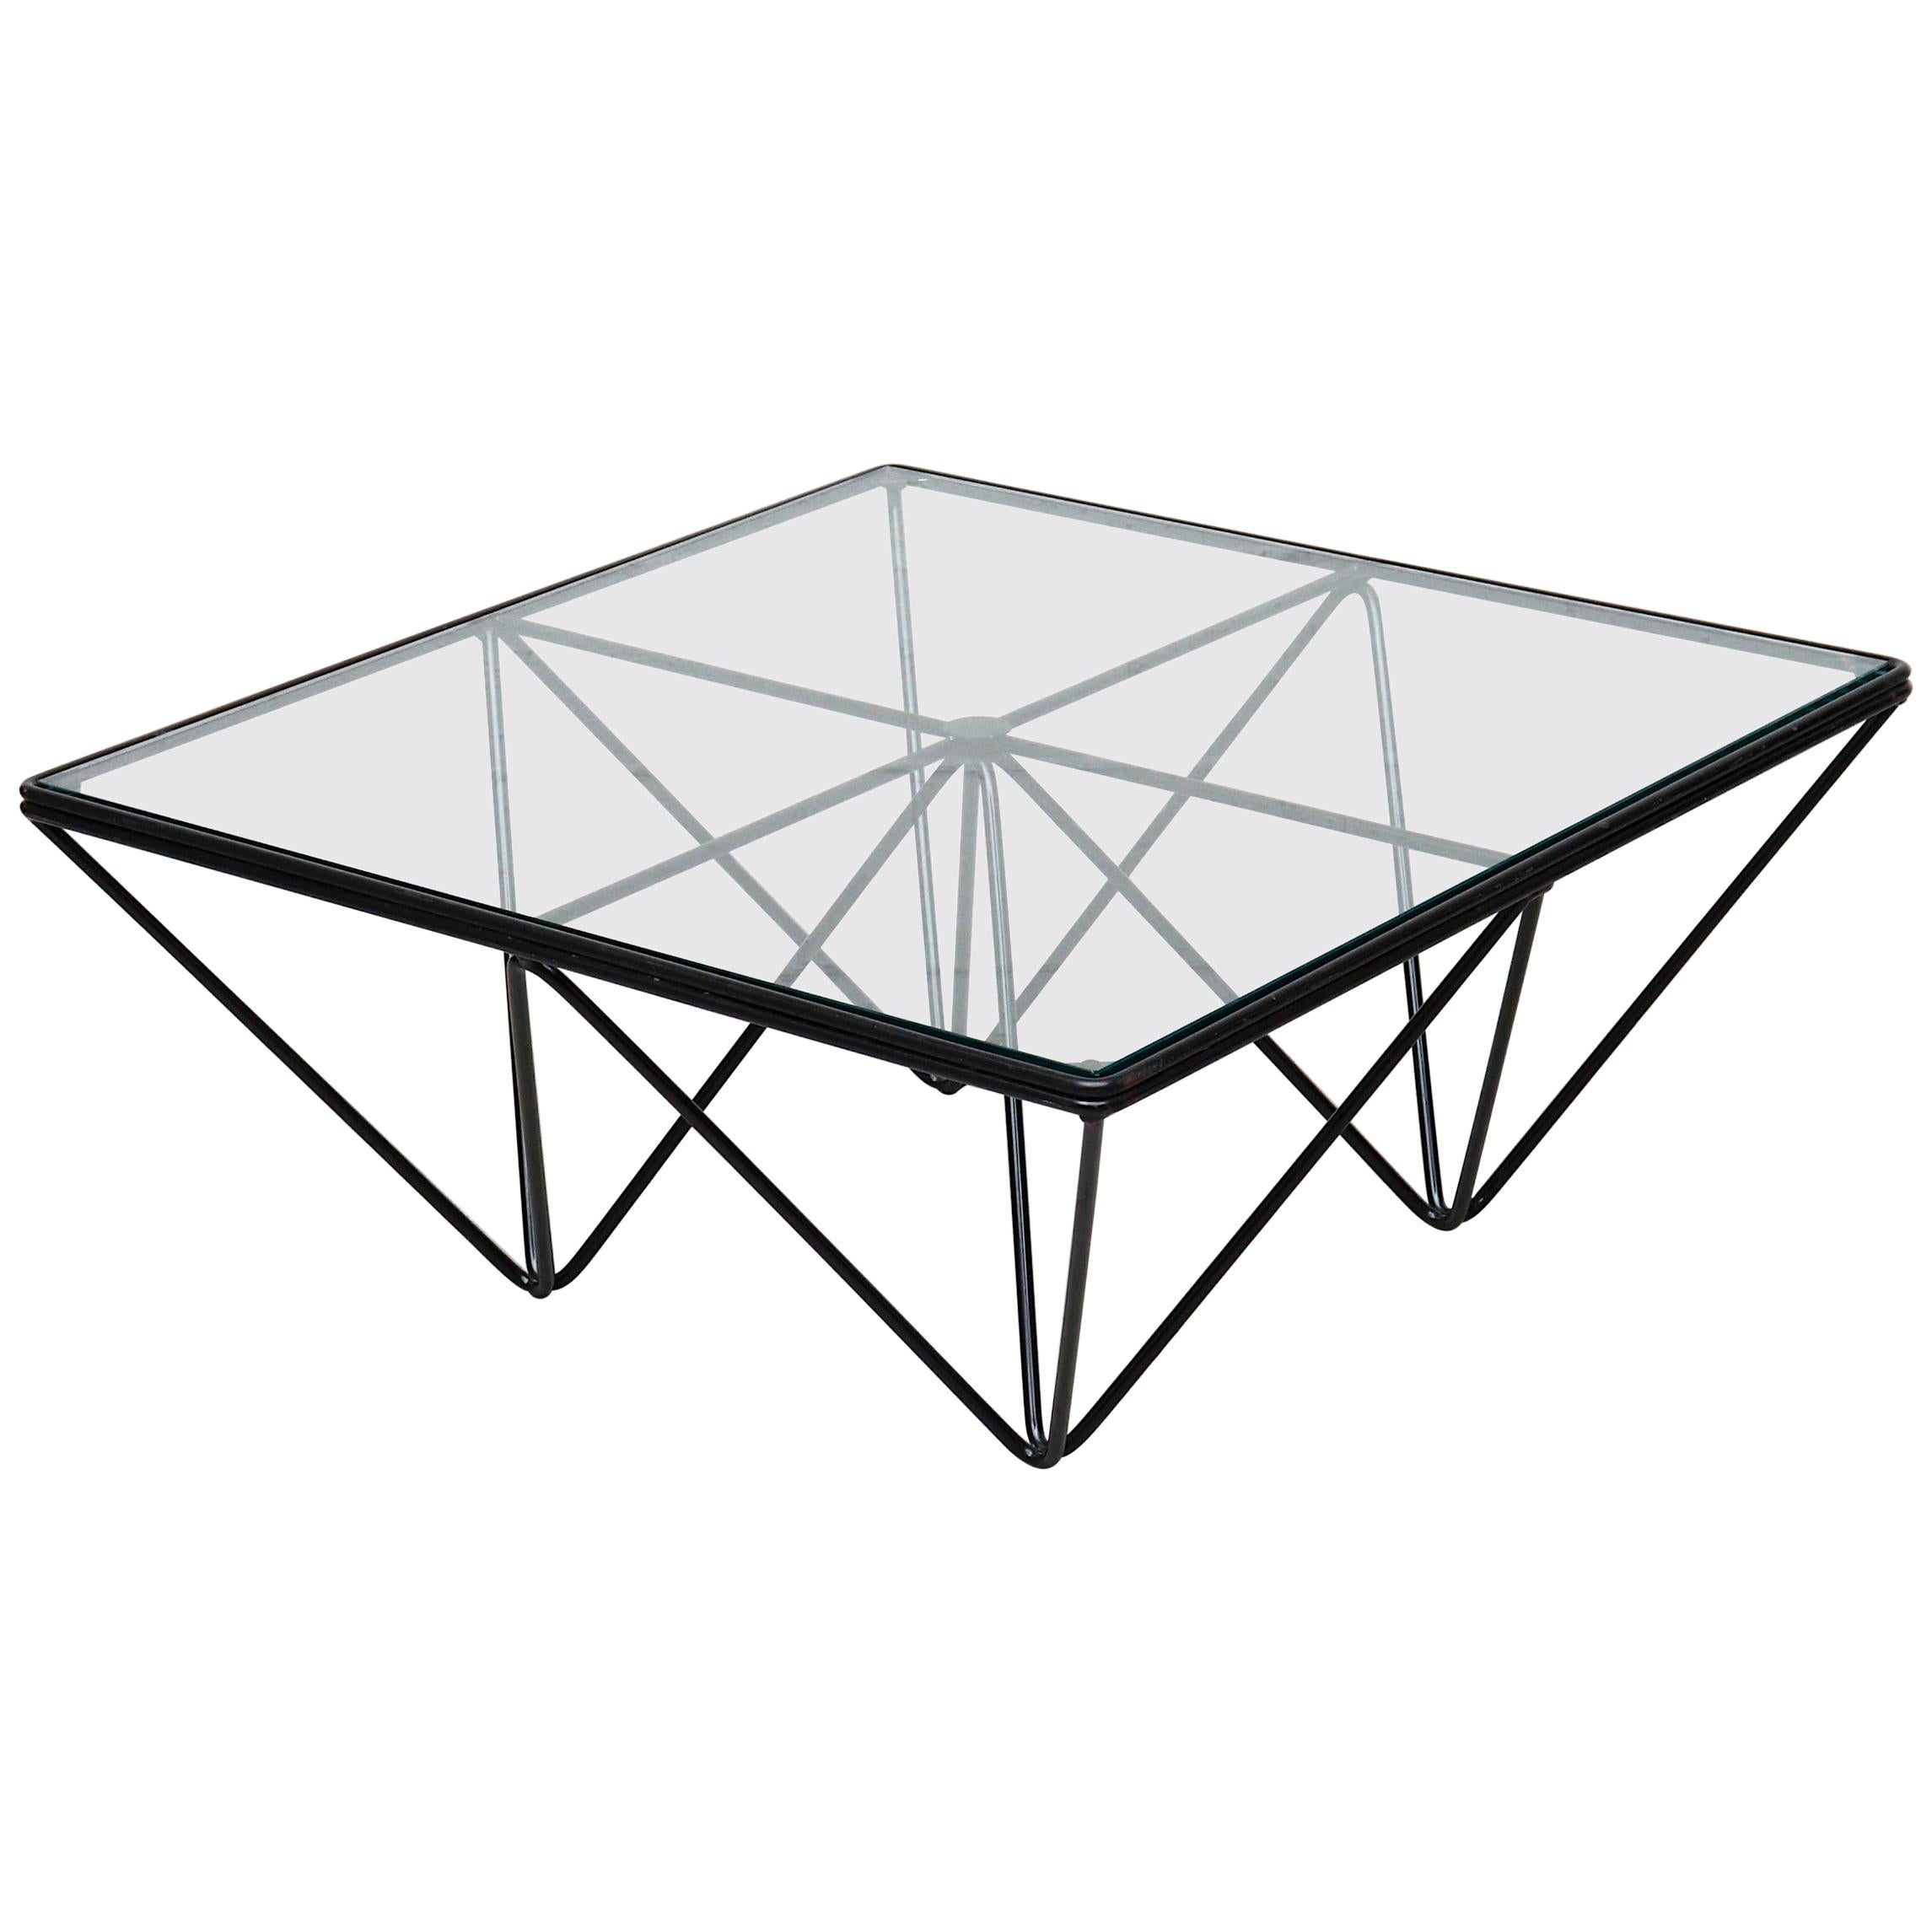 Mini Paolo Piva Style "ALANDA" Pyramid Table